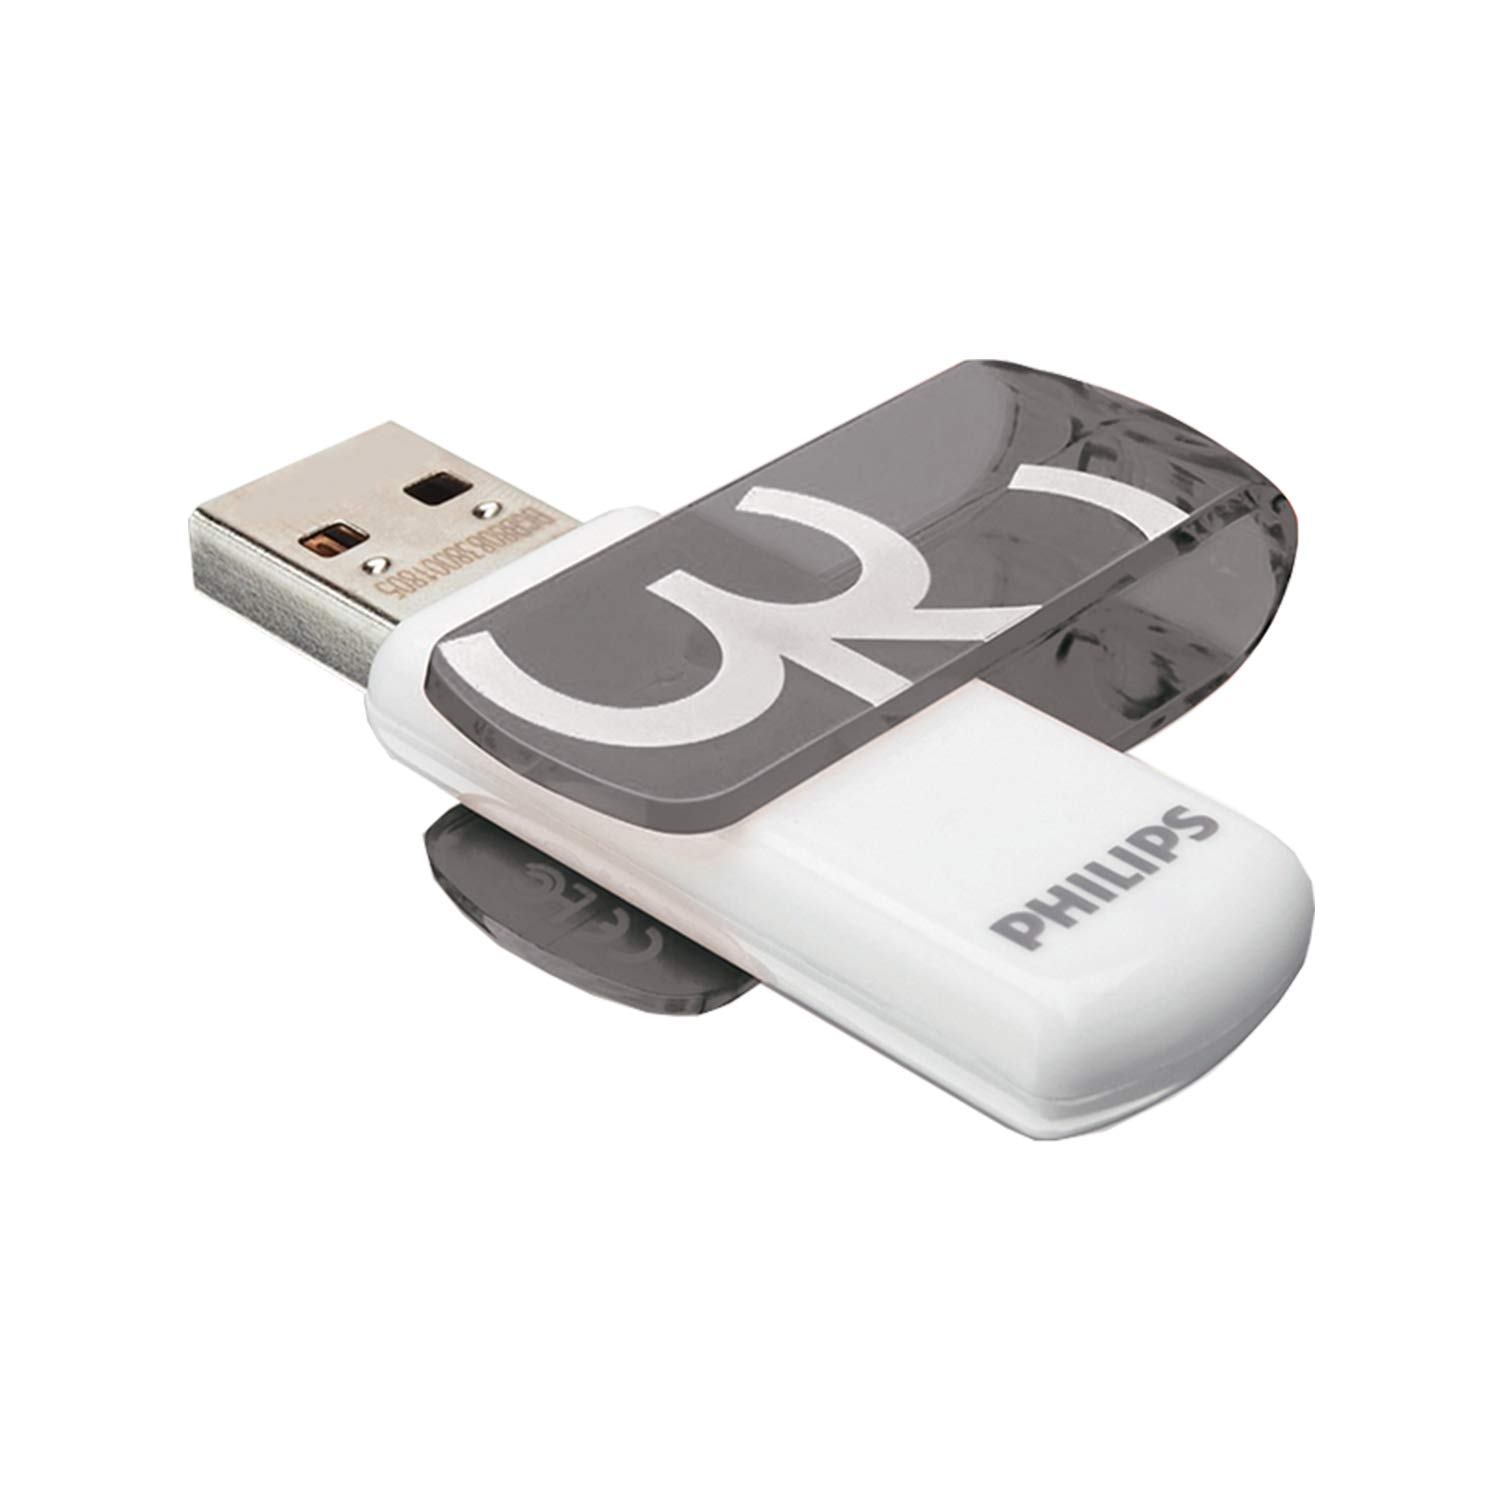 PHILIPS Vivid Edition Shadow GB) 32 Gey®, 23 MB/s USB-Stick (Weiß